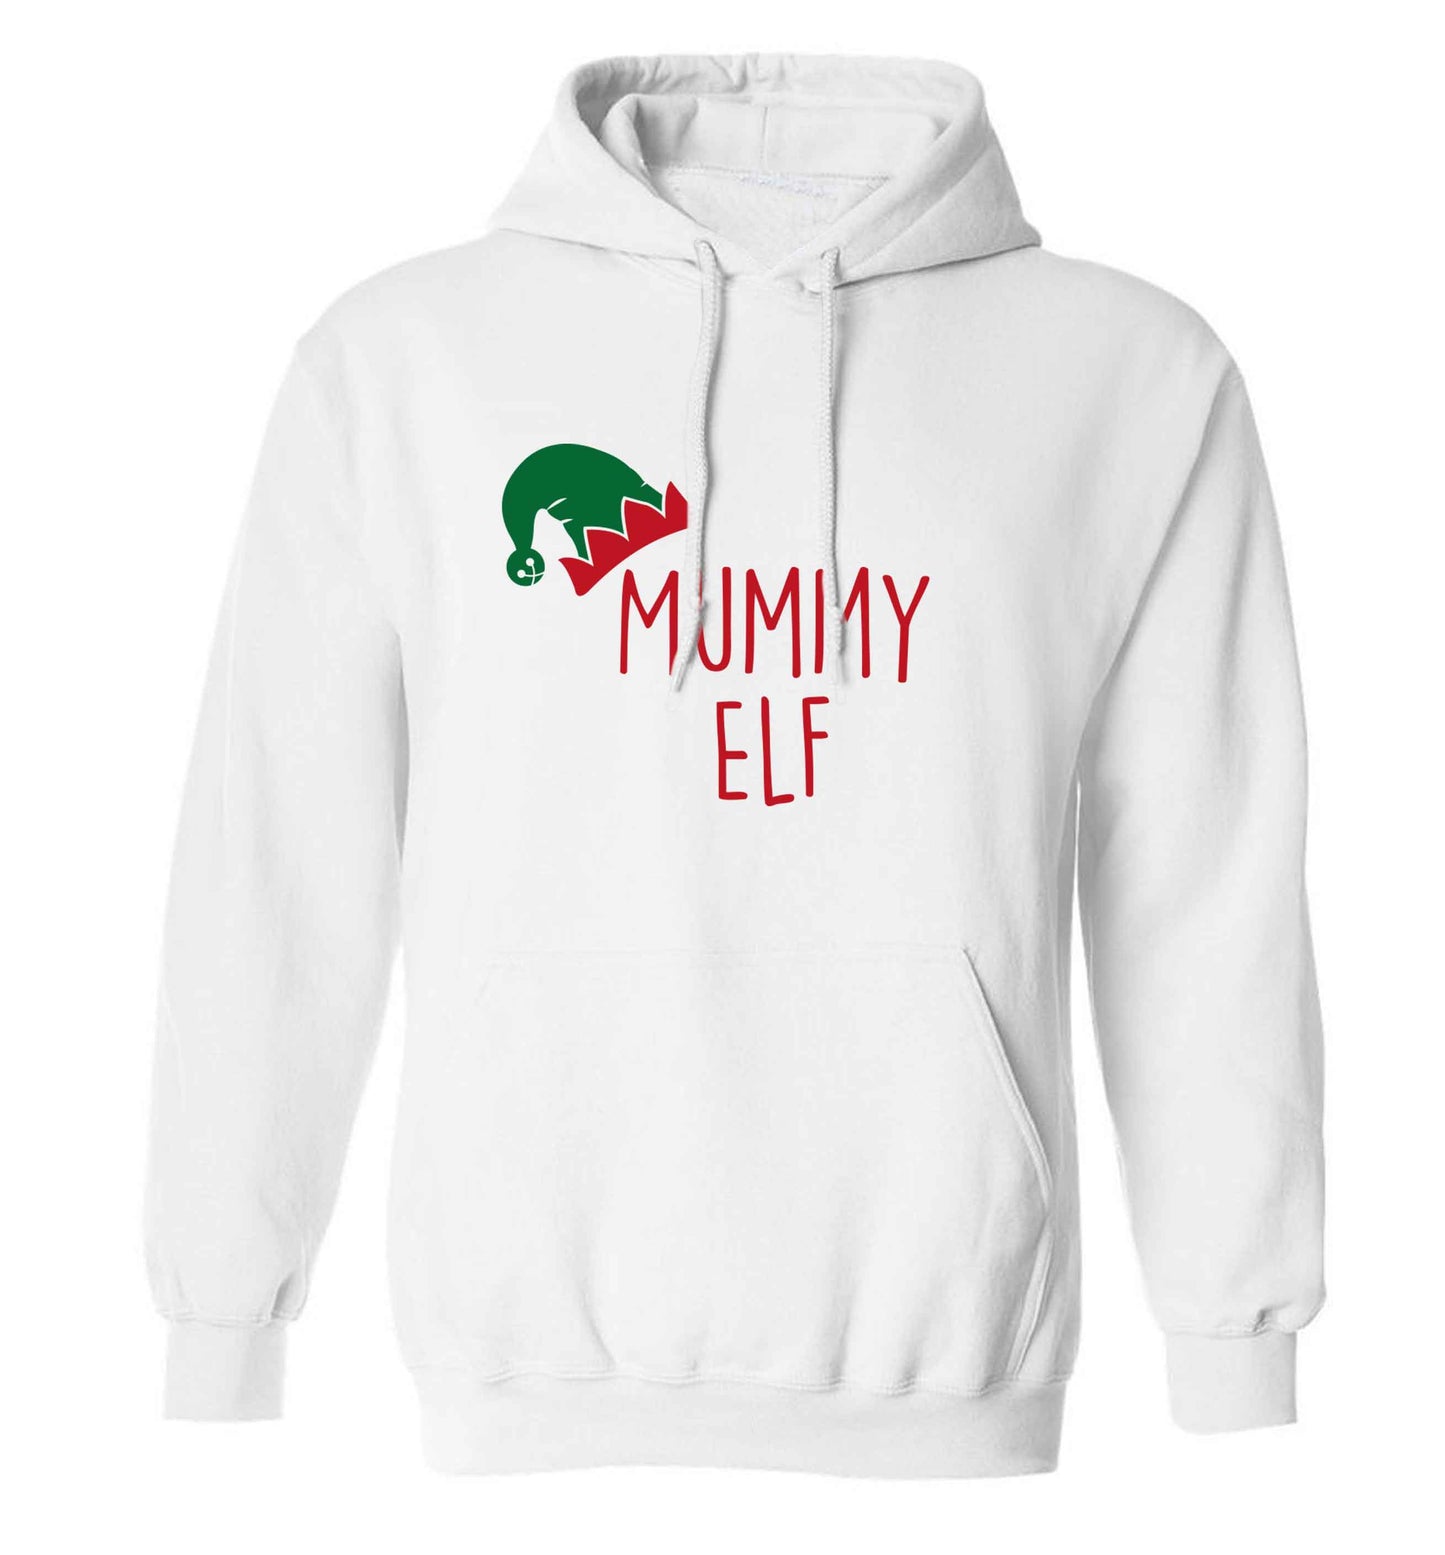 Mummy elf adults unisex white hoodie 2XL